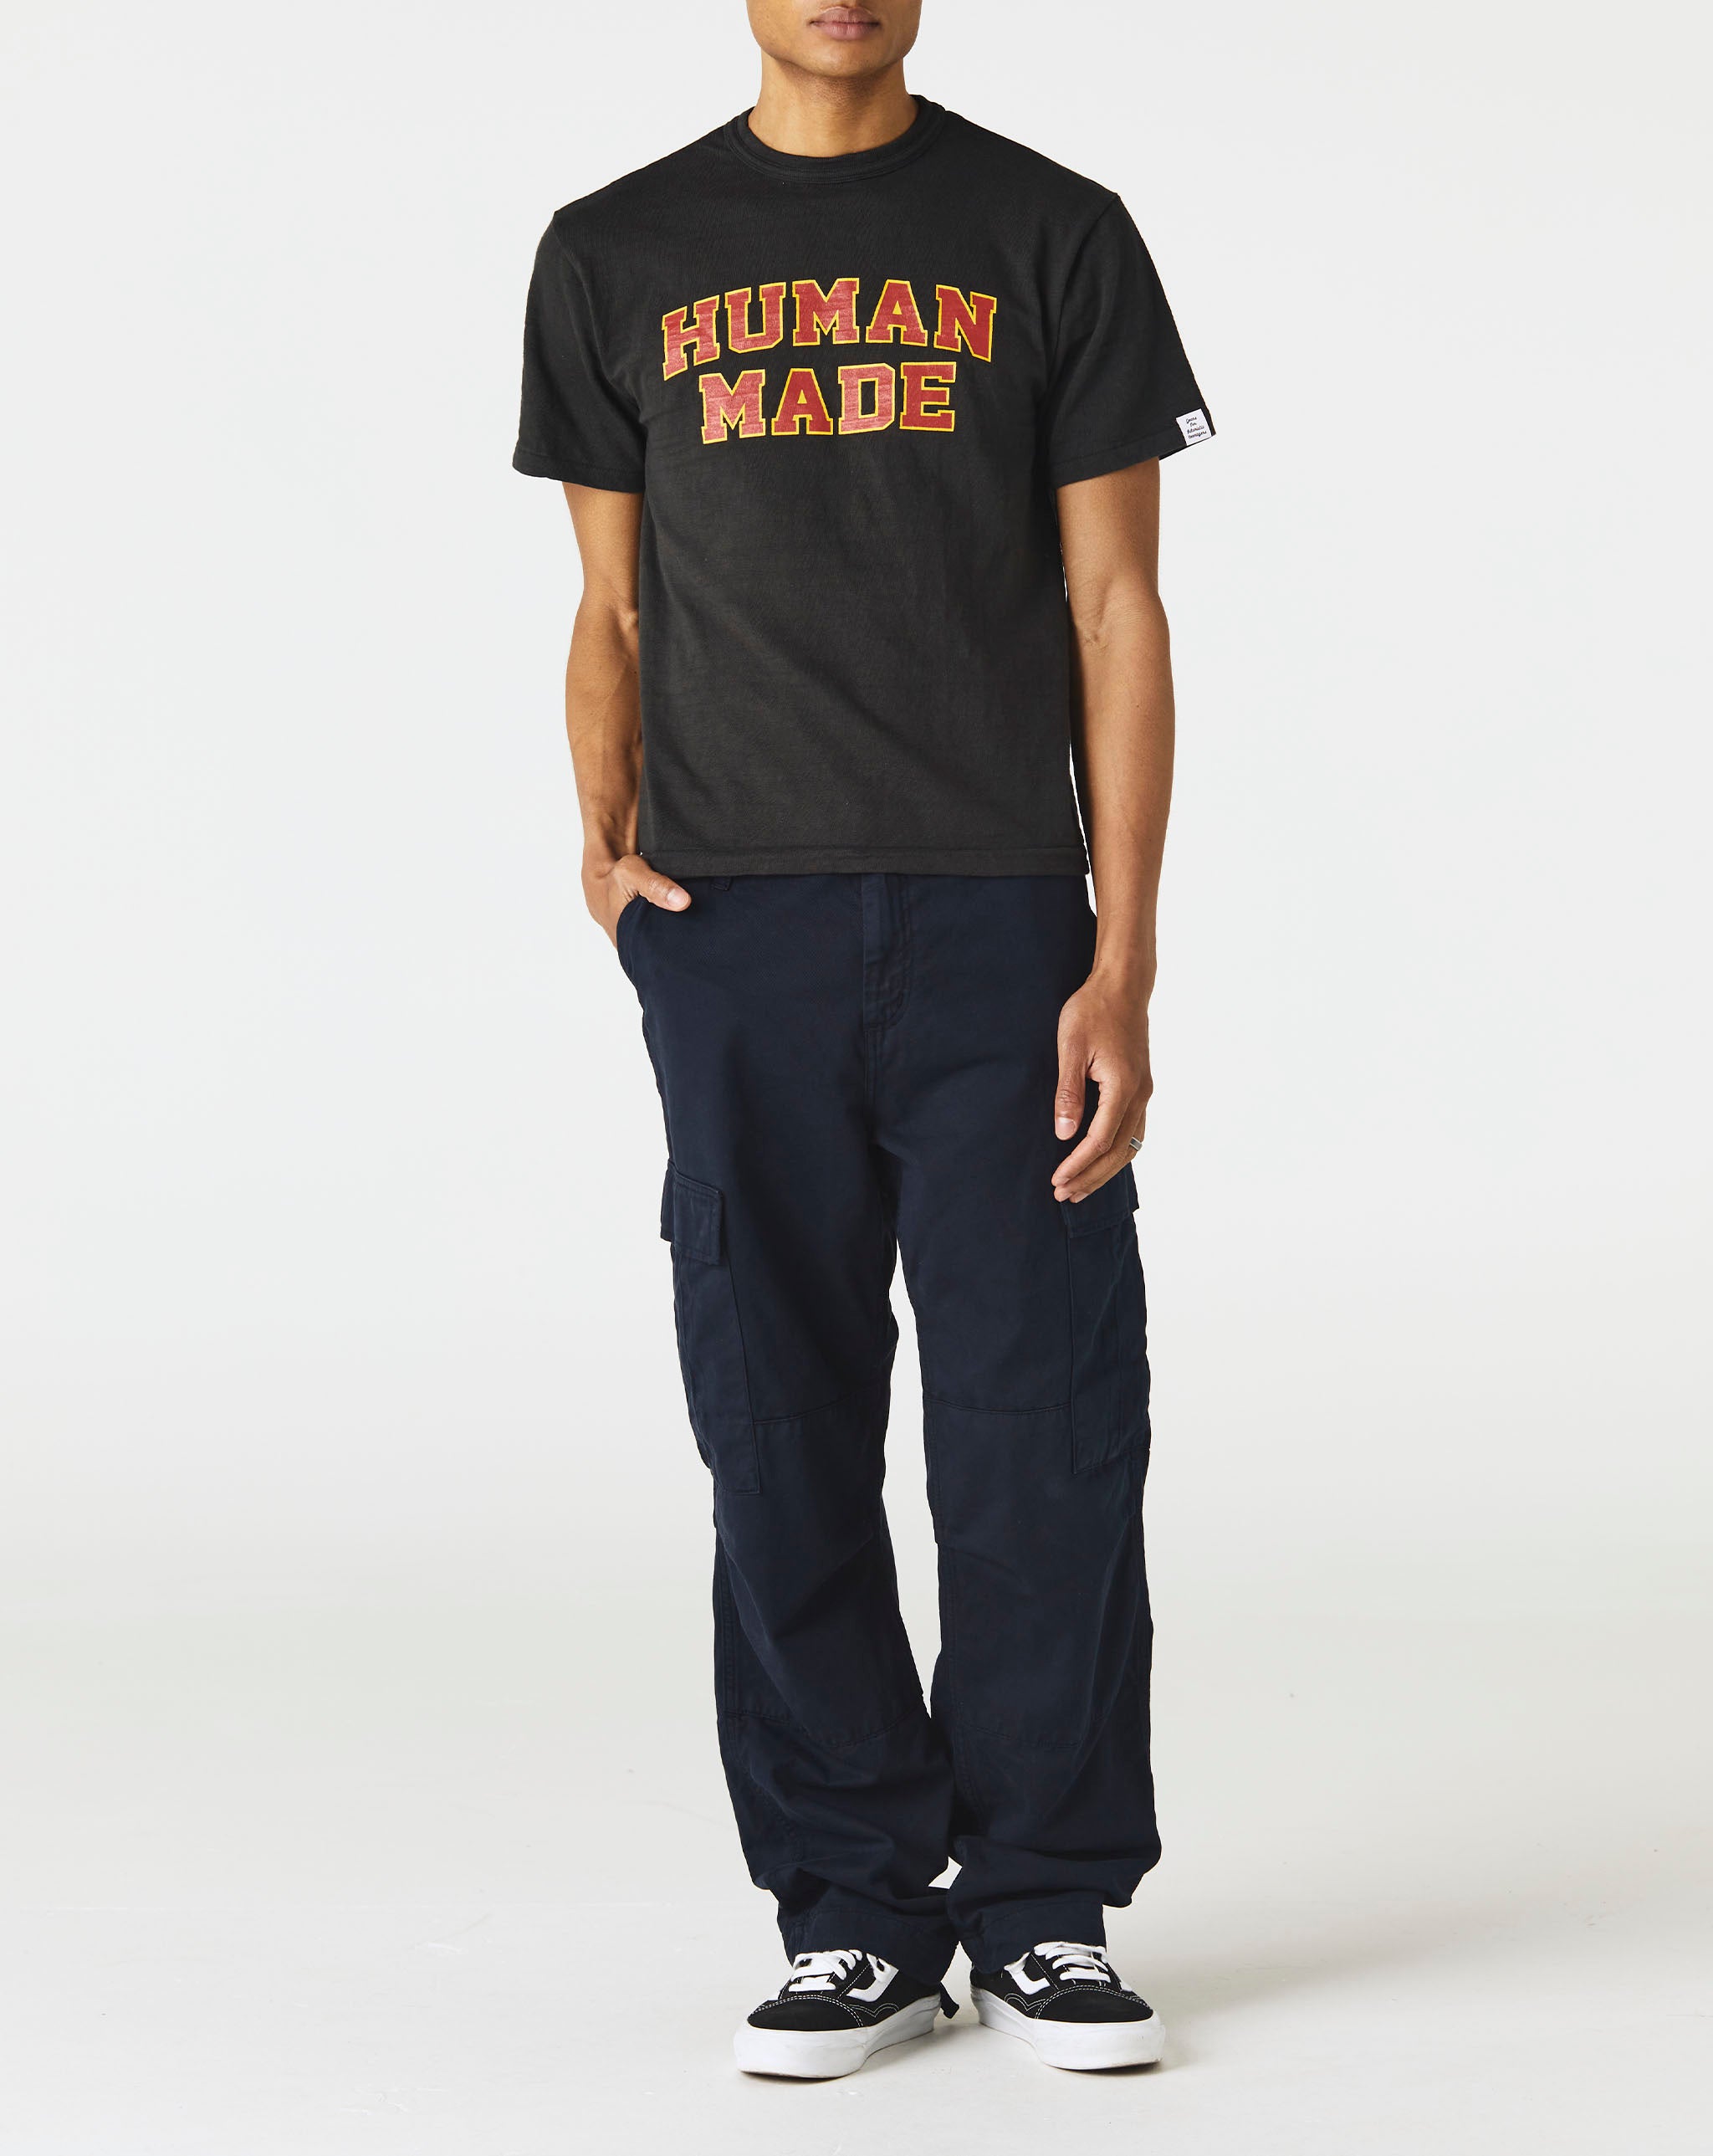 Human Made T-Shirt #2307  - XHIBITION